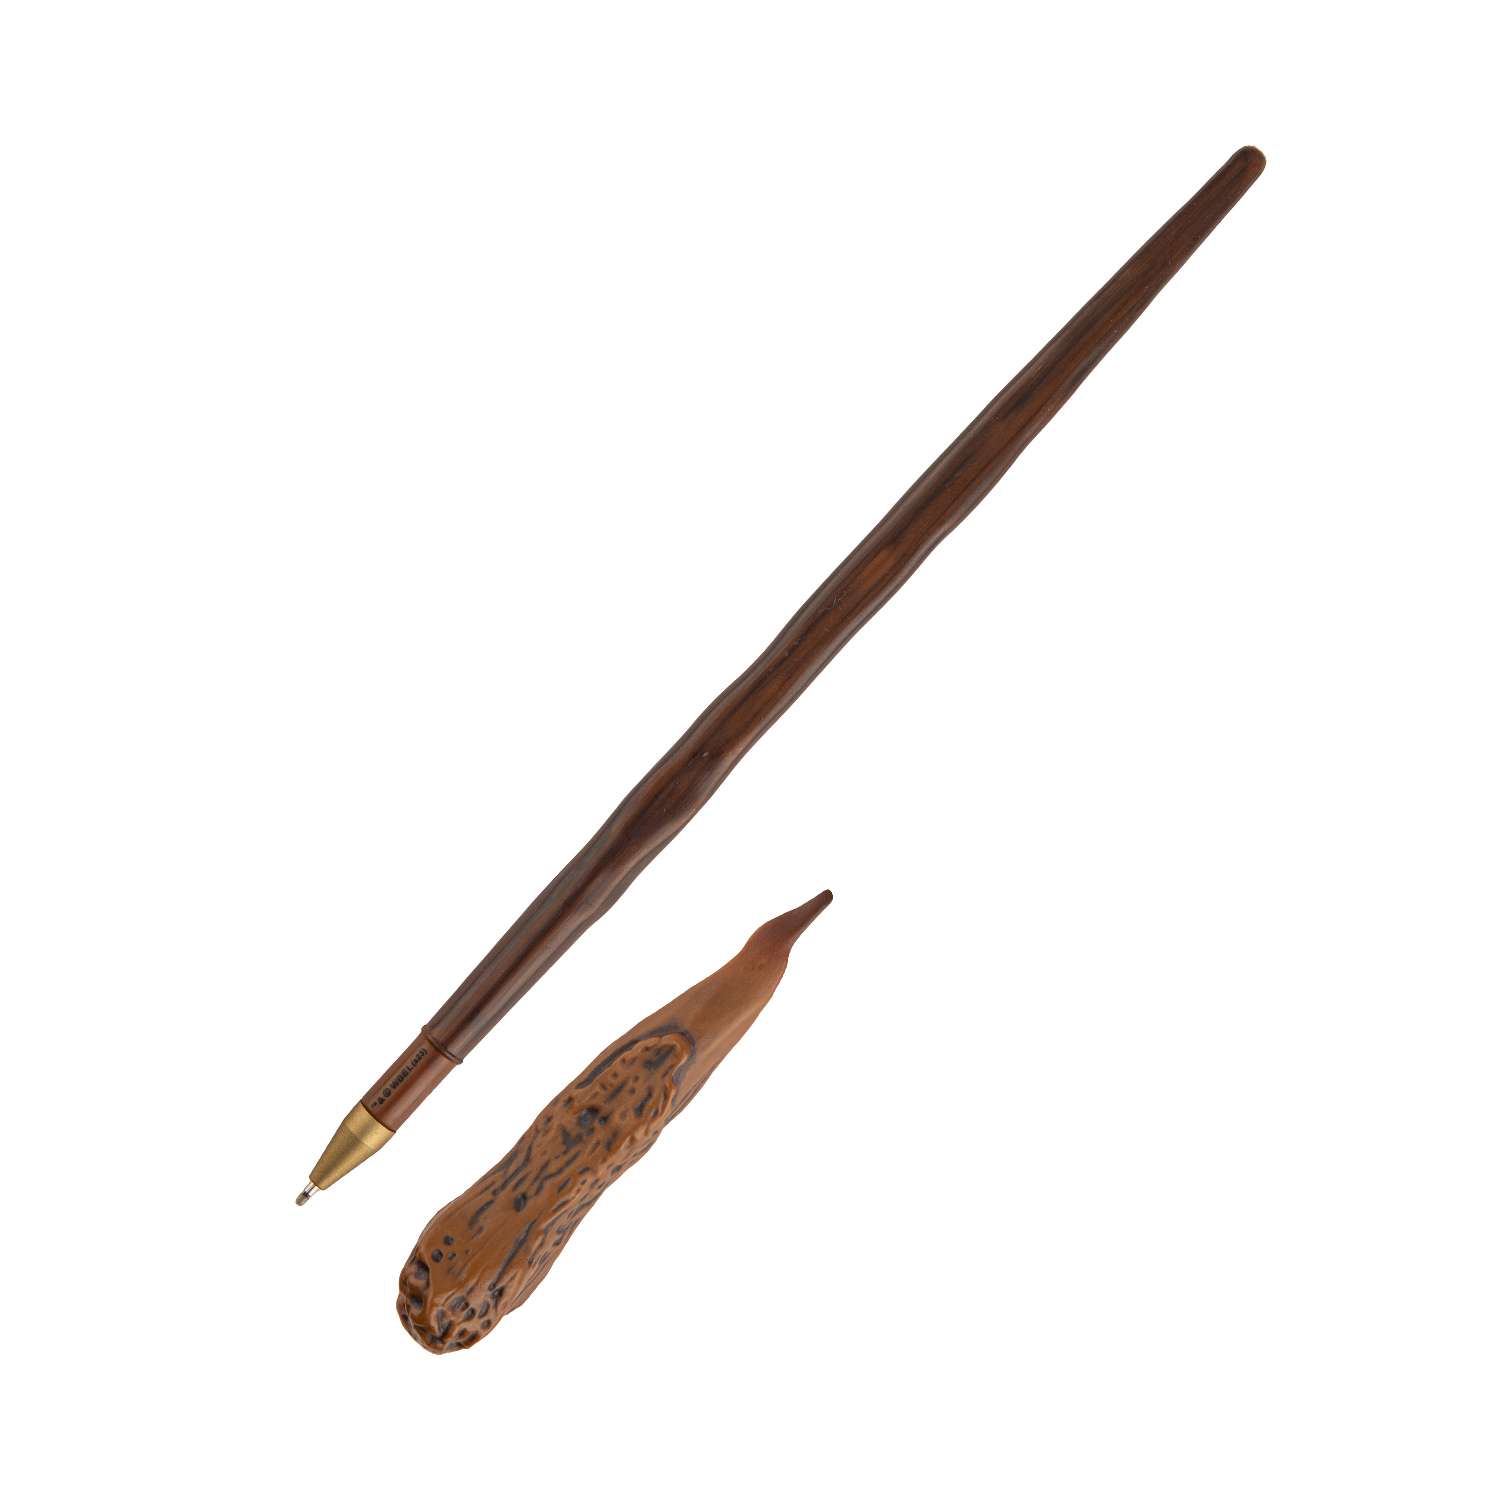 Ручка Harry Potter в виде палочки Рона Уизли 25 см с подставкой и закладкой - фото 3